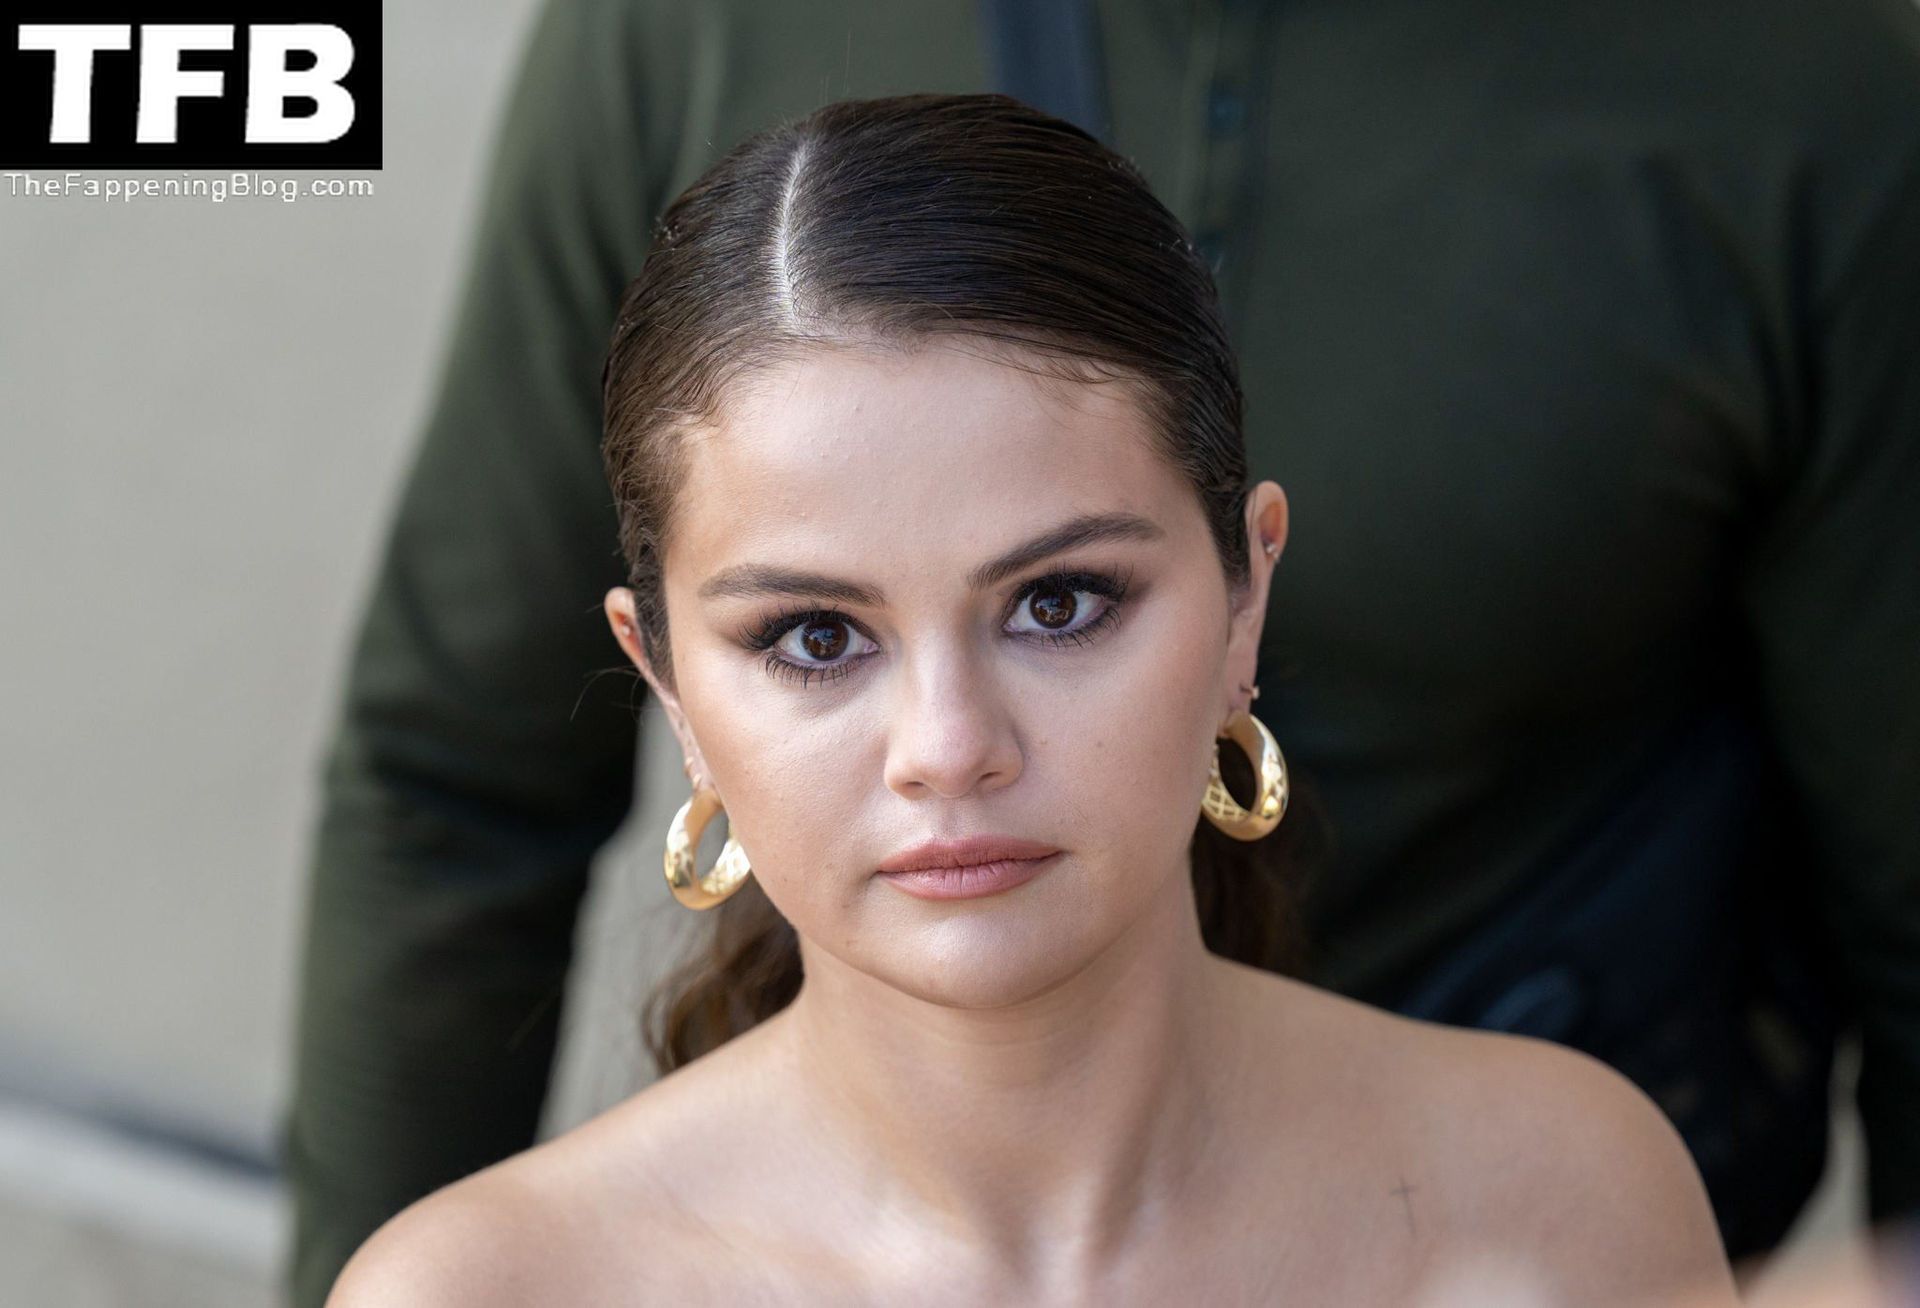 Selena-Gomez-The-Fappening-Blog-15.jpg